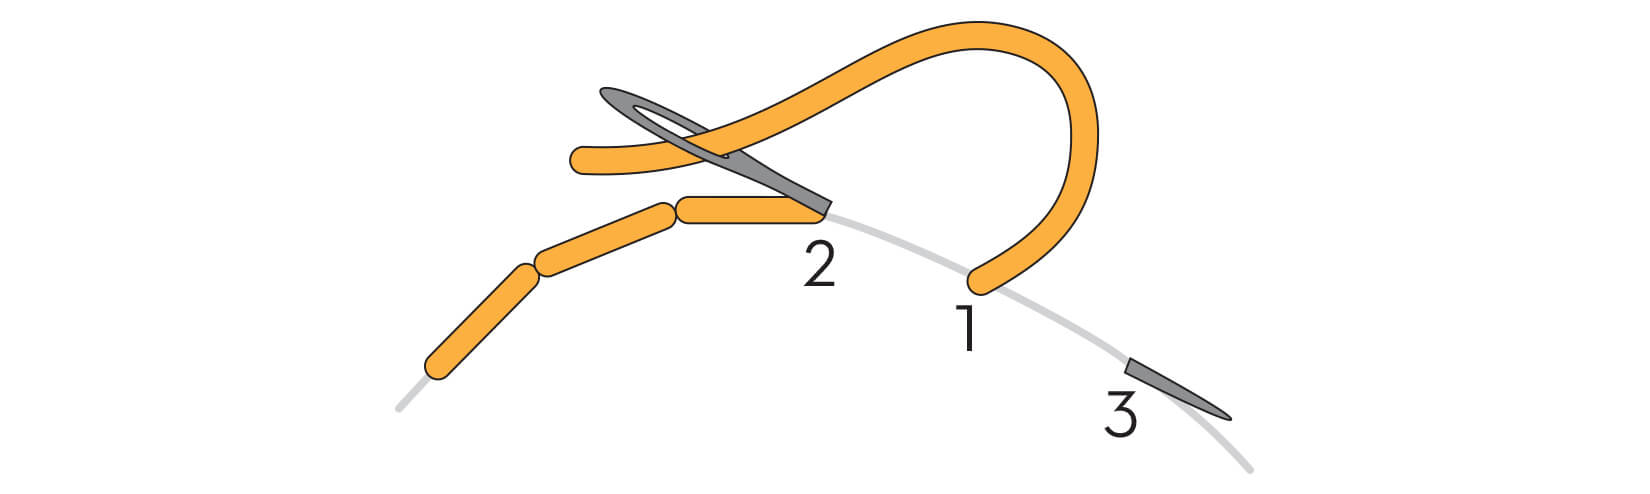 Backstitch diagram